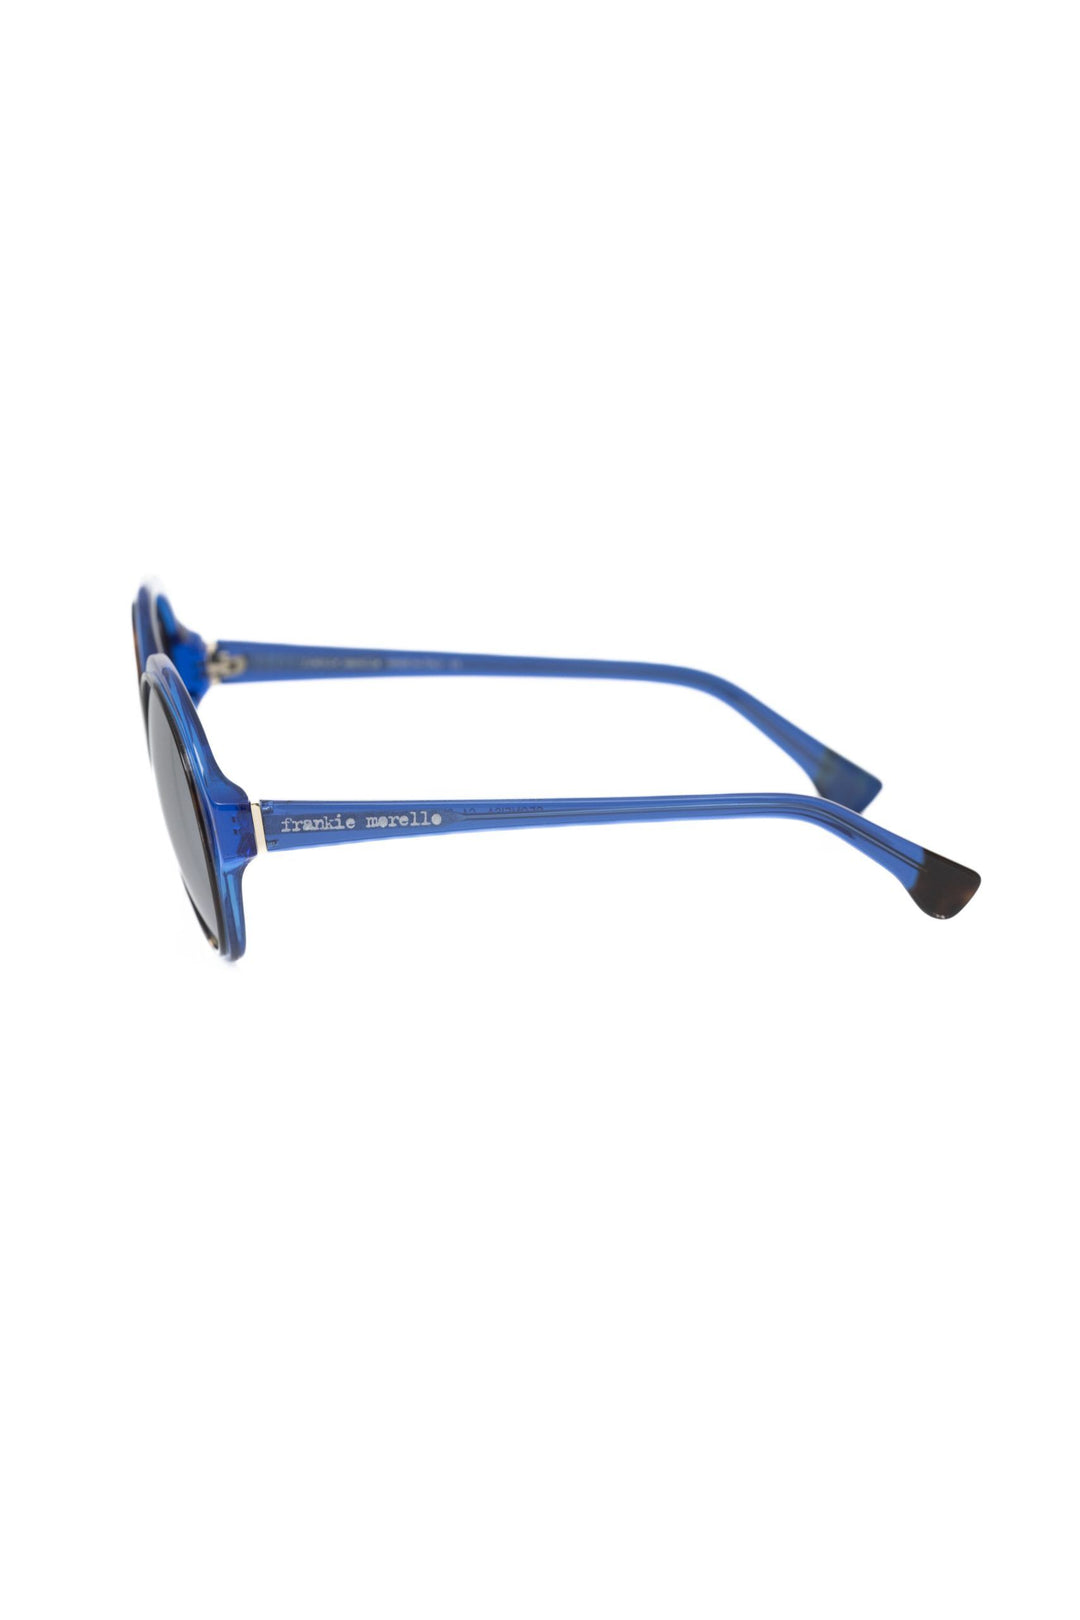 Frankie Morello Chic Transparent Blue Round Sunglasses